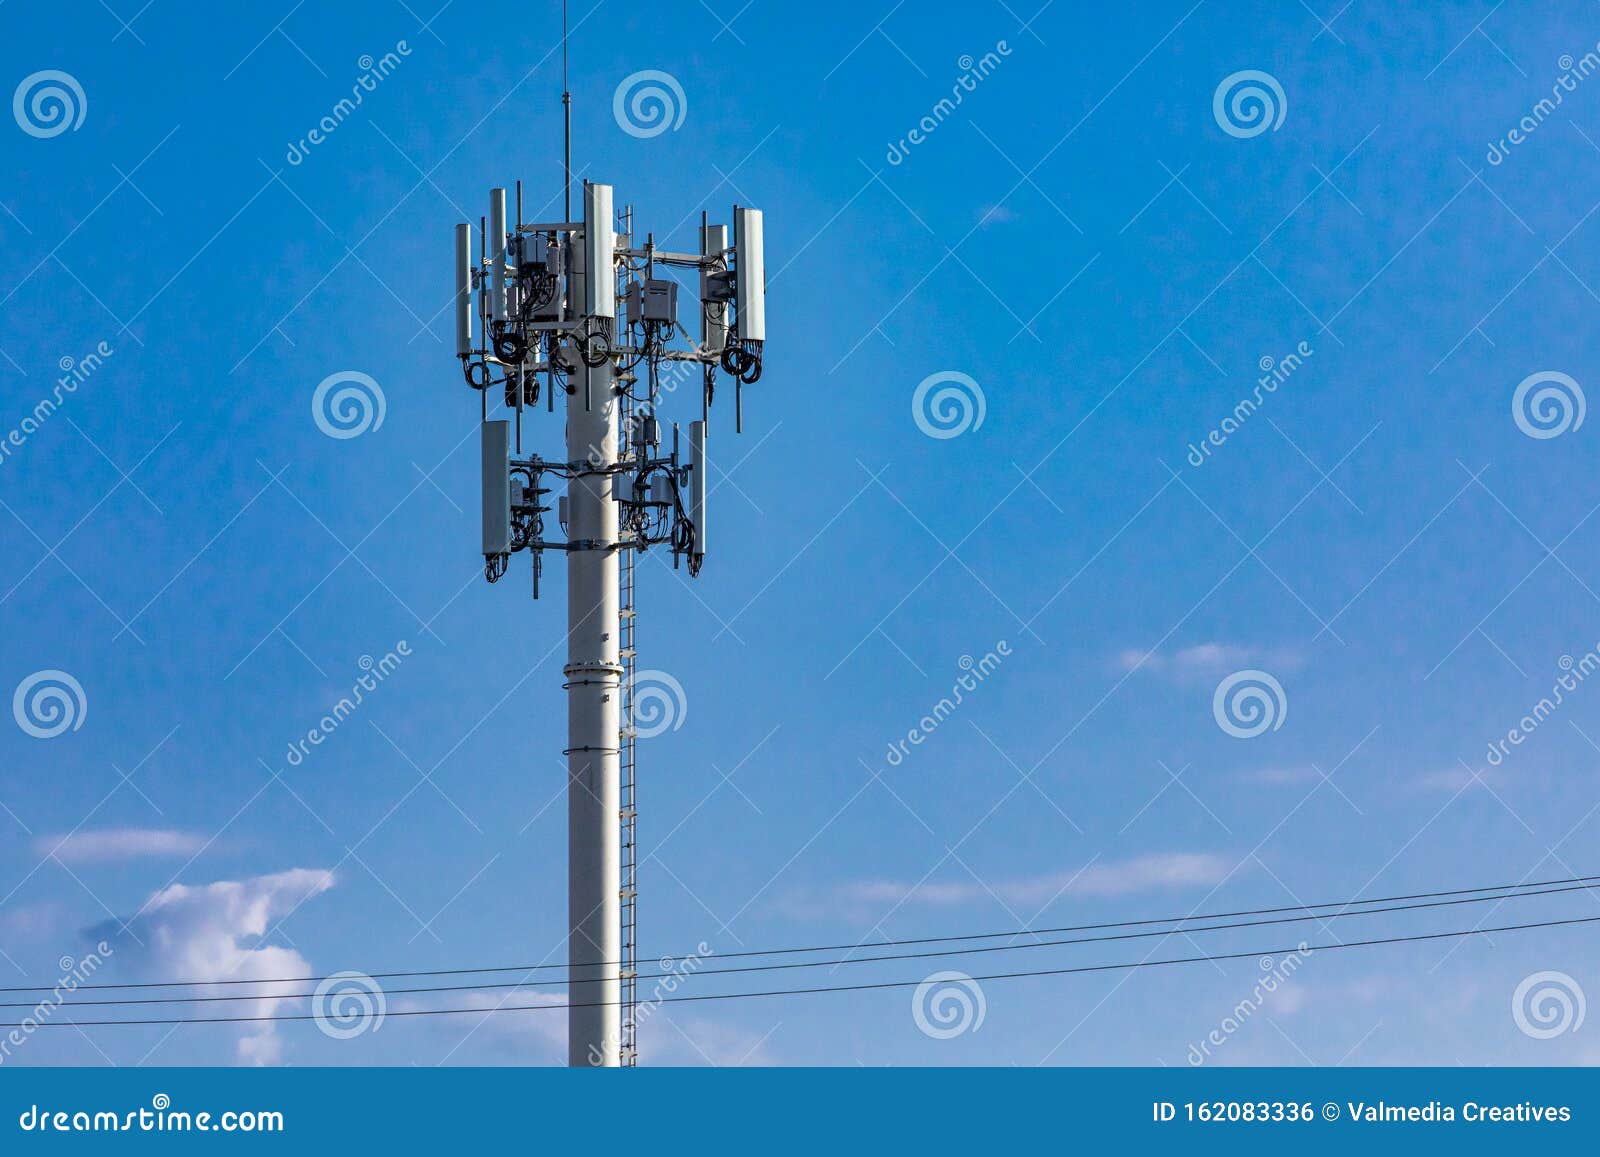 Cellular Base Station Against Blue Sky Stock Photo Image Of Mobile